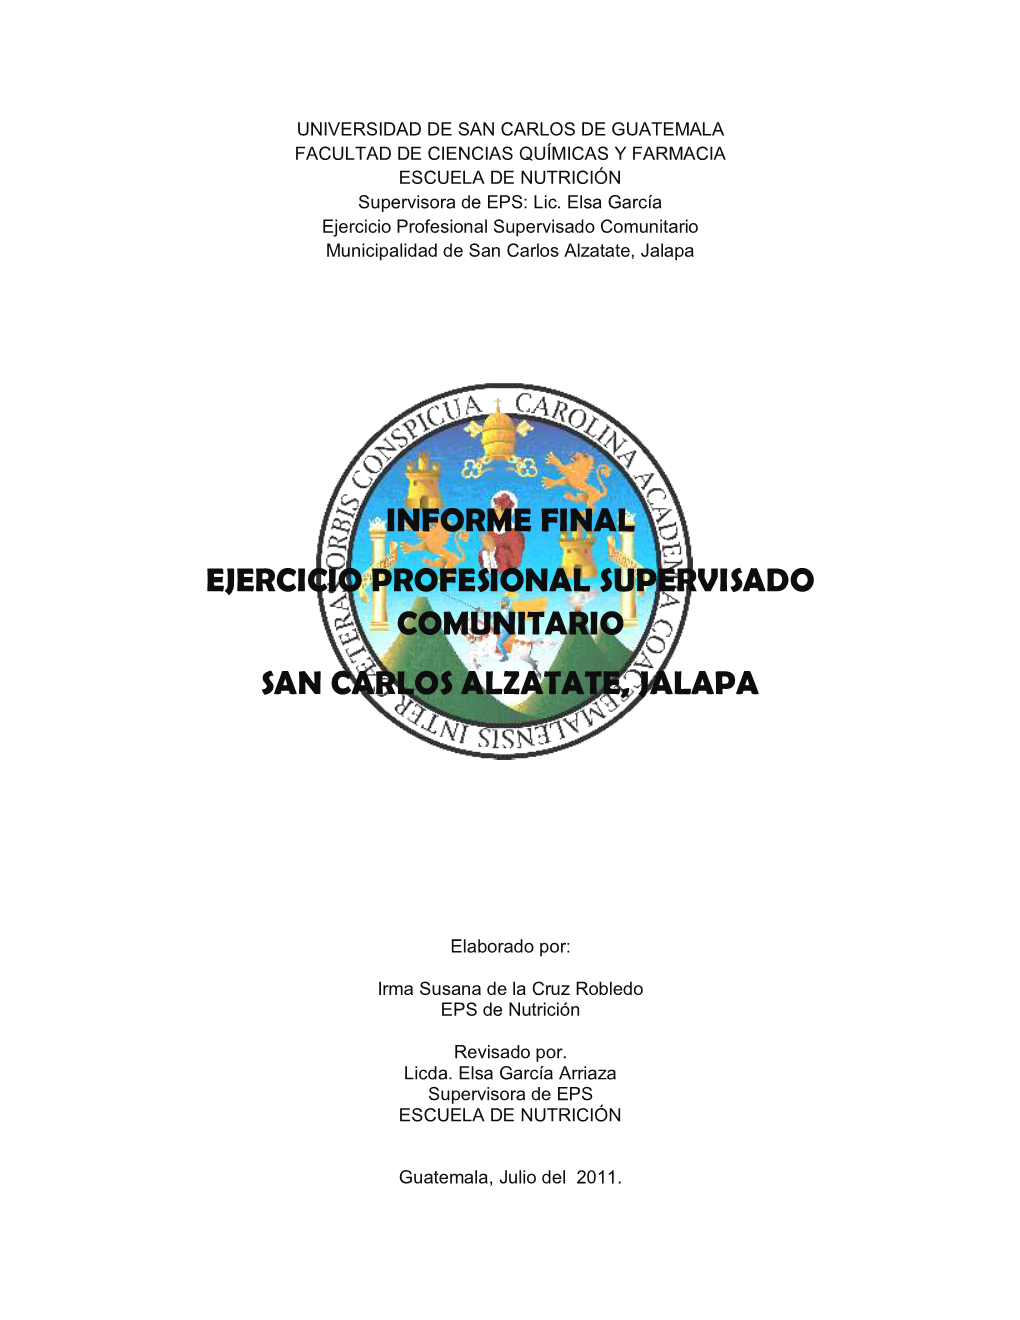 Informe Final Ejercicio Profesional Supervisado Comunitario San Carlos Alzatate, Jalapa